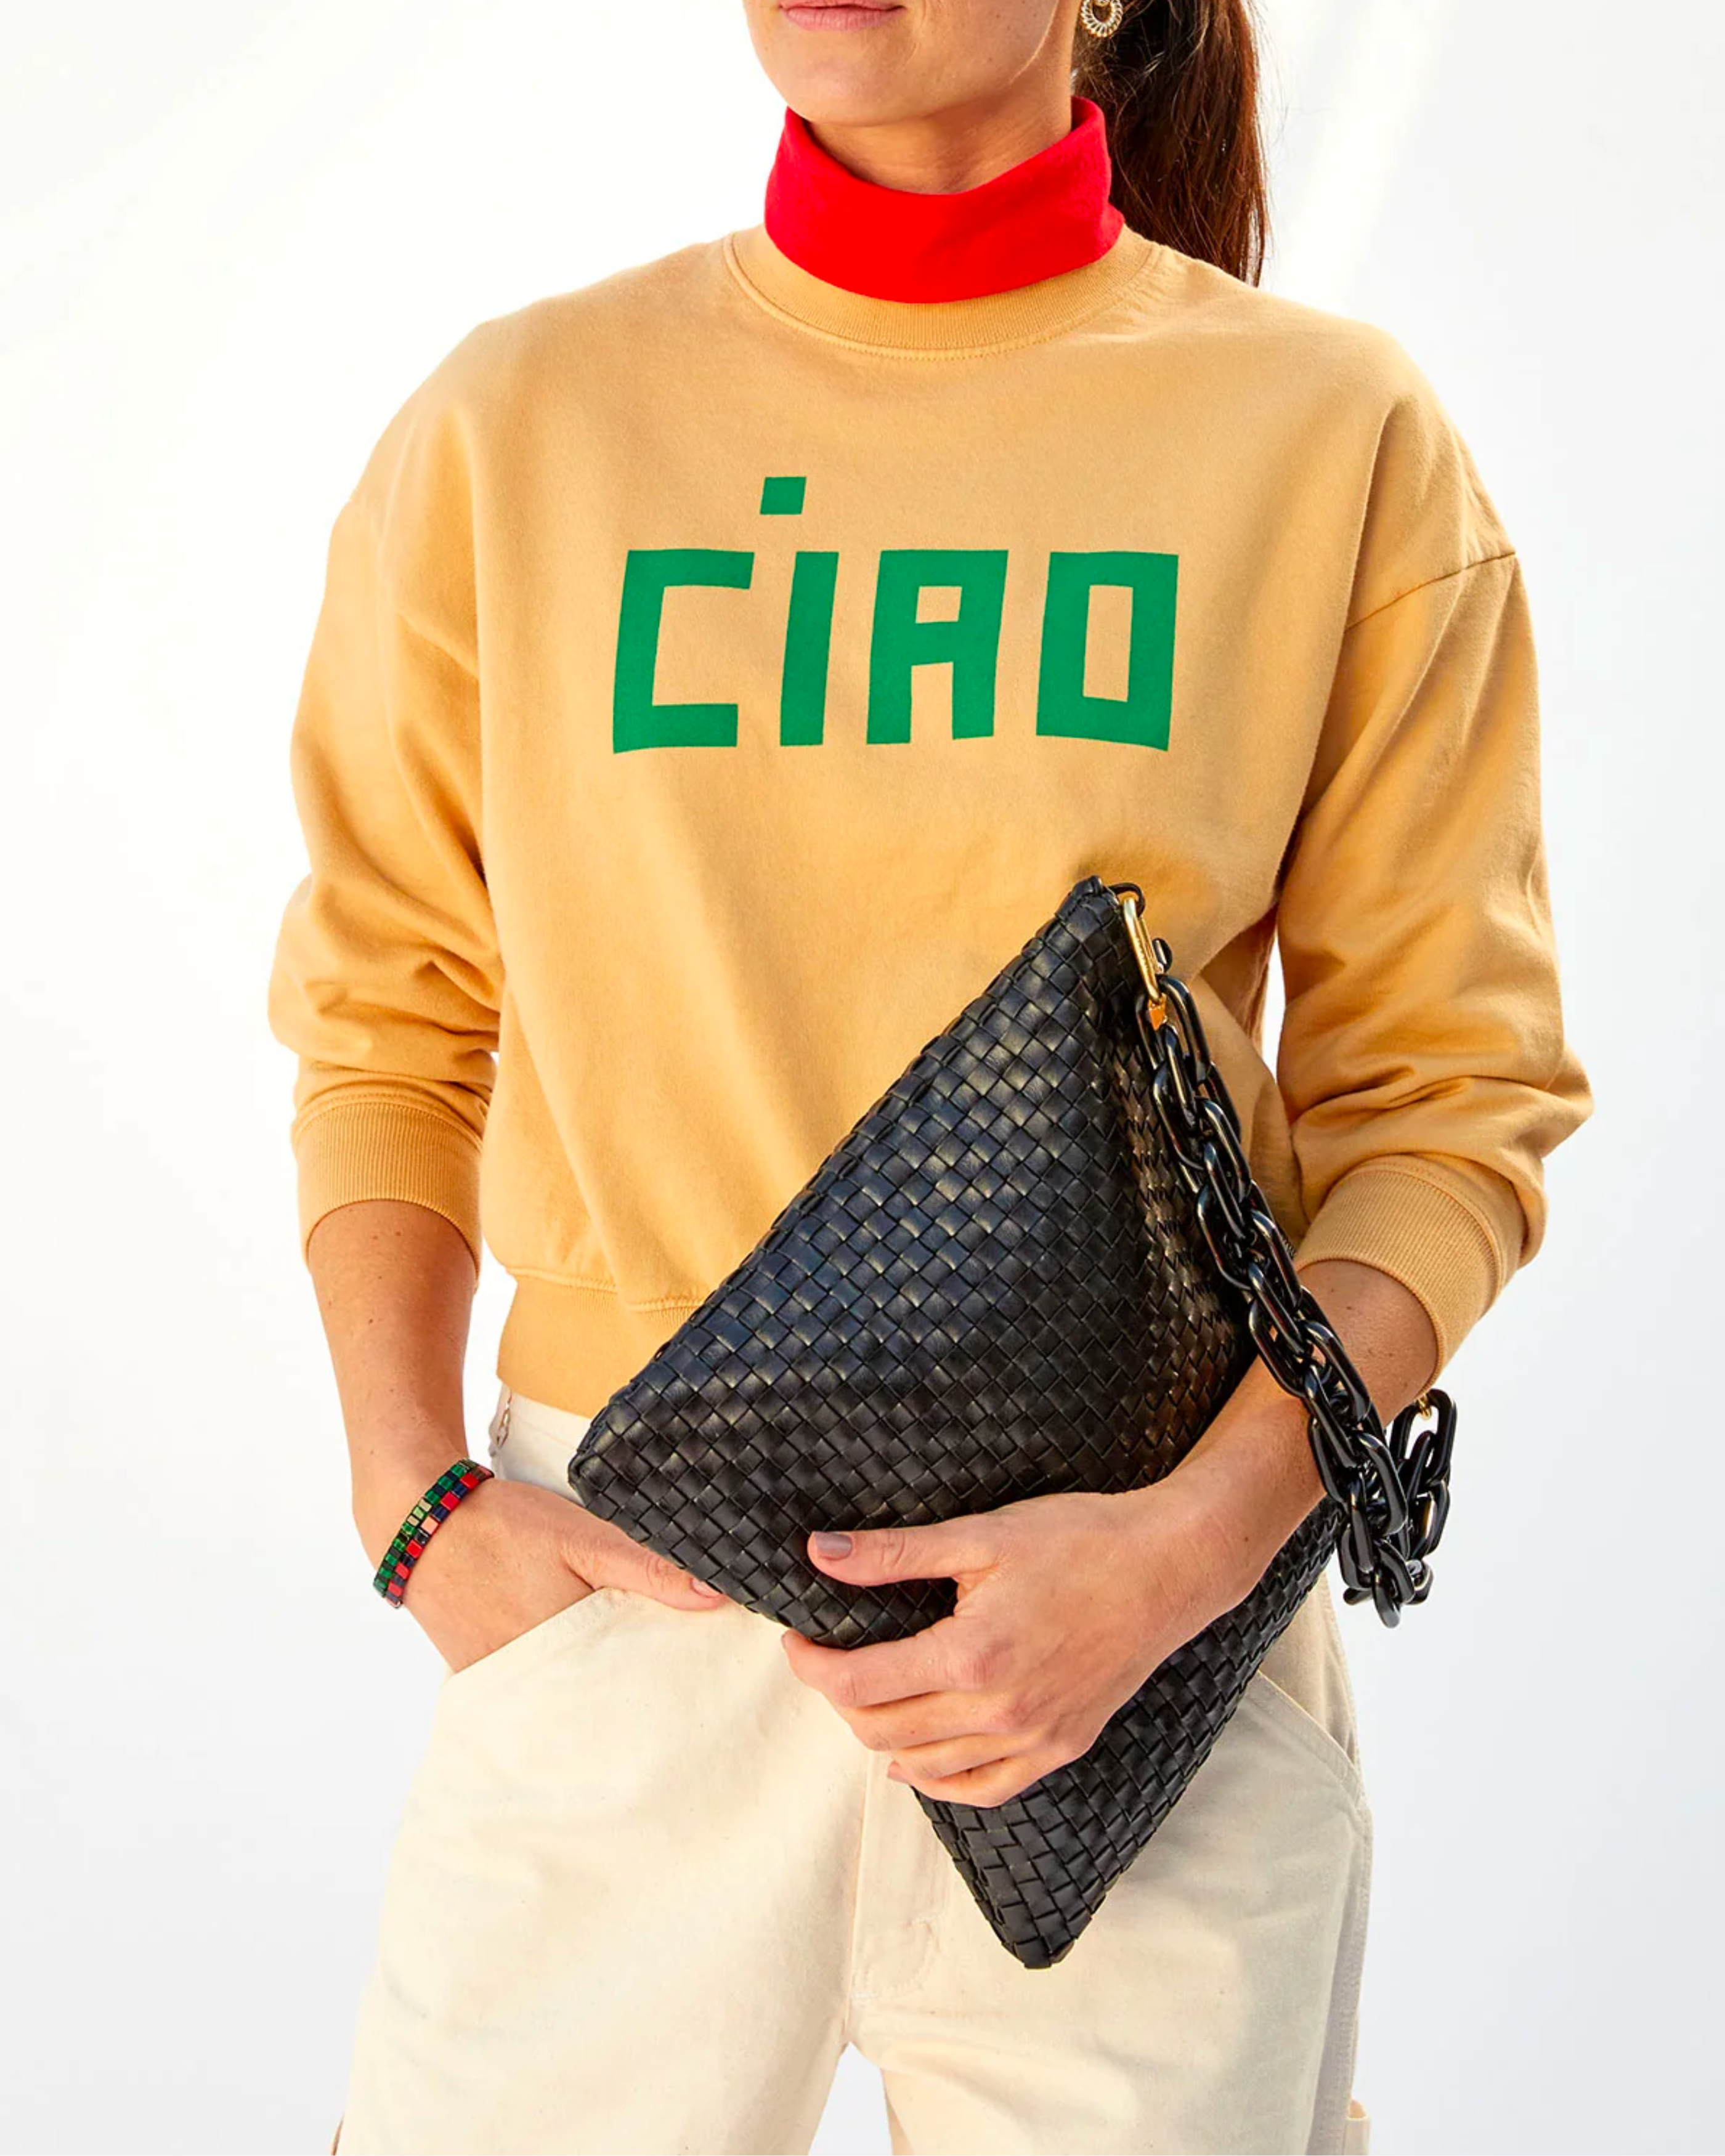 Clare V. Le Drop Sweatshirt in Oat with Fern Block Ciao